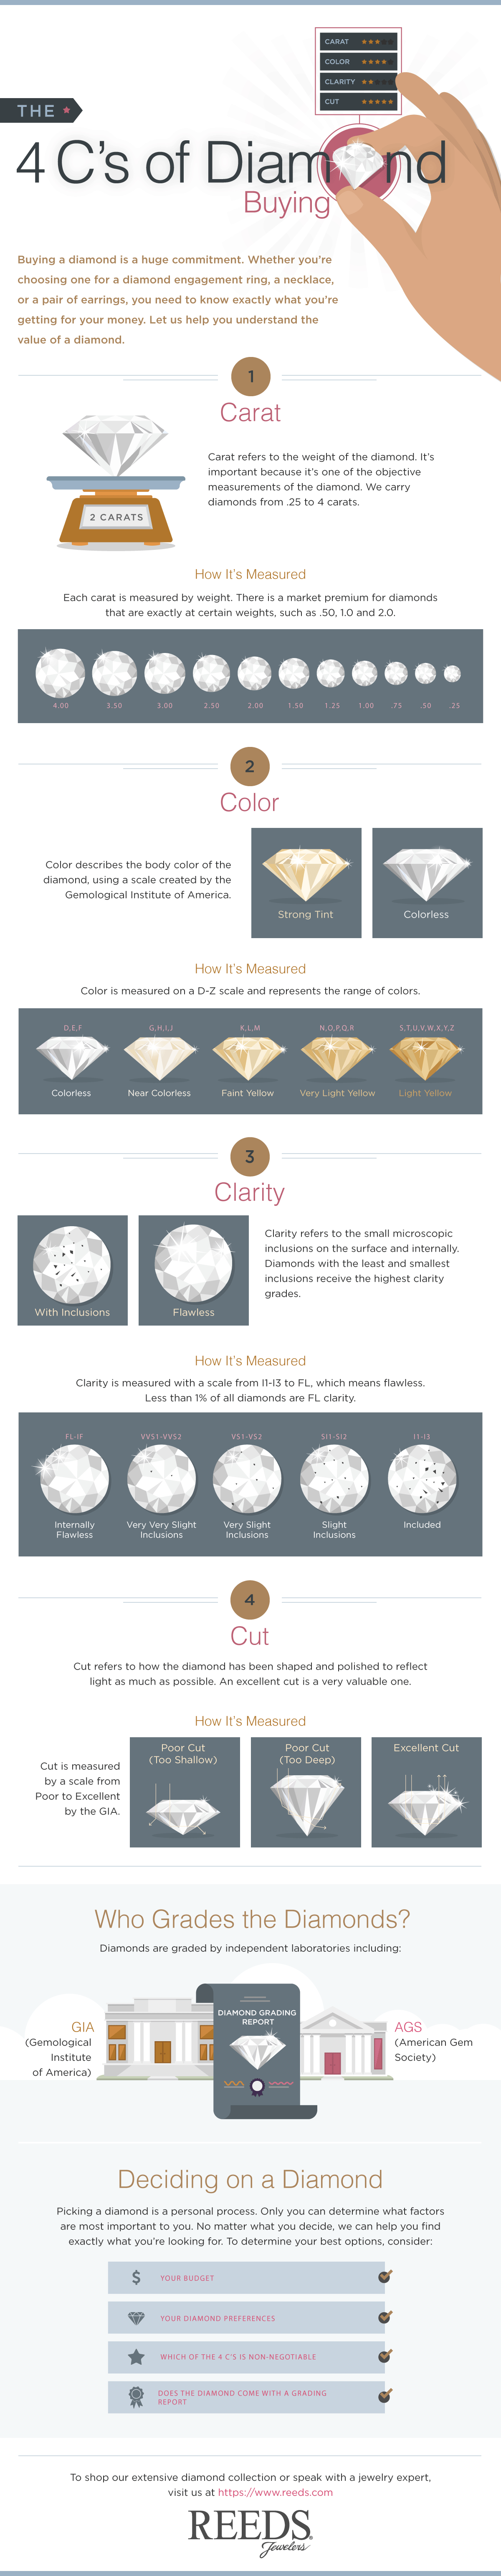 The 4 C's of Diamond Buying - Infographic